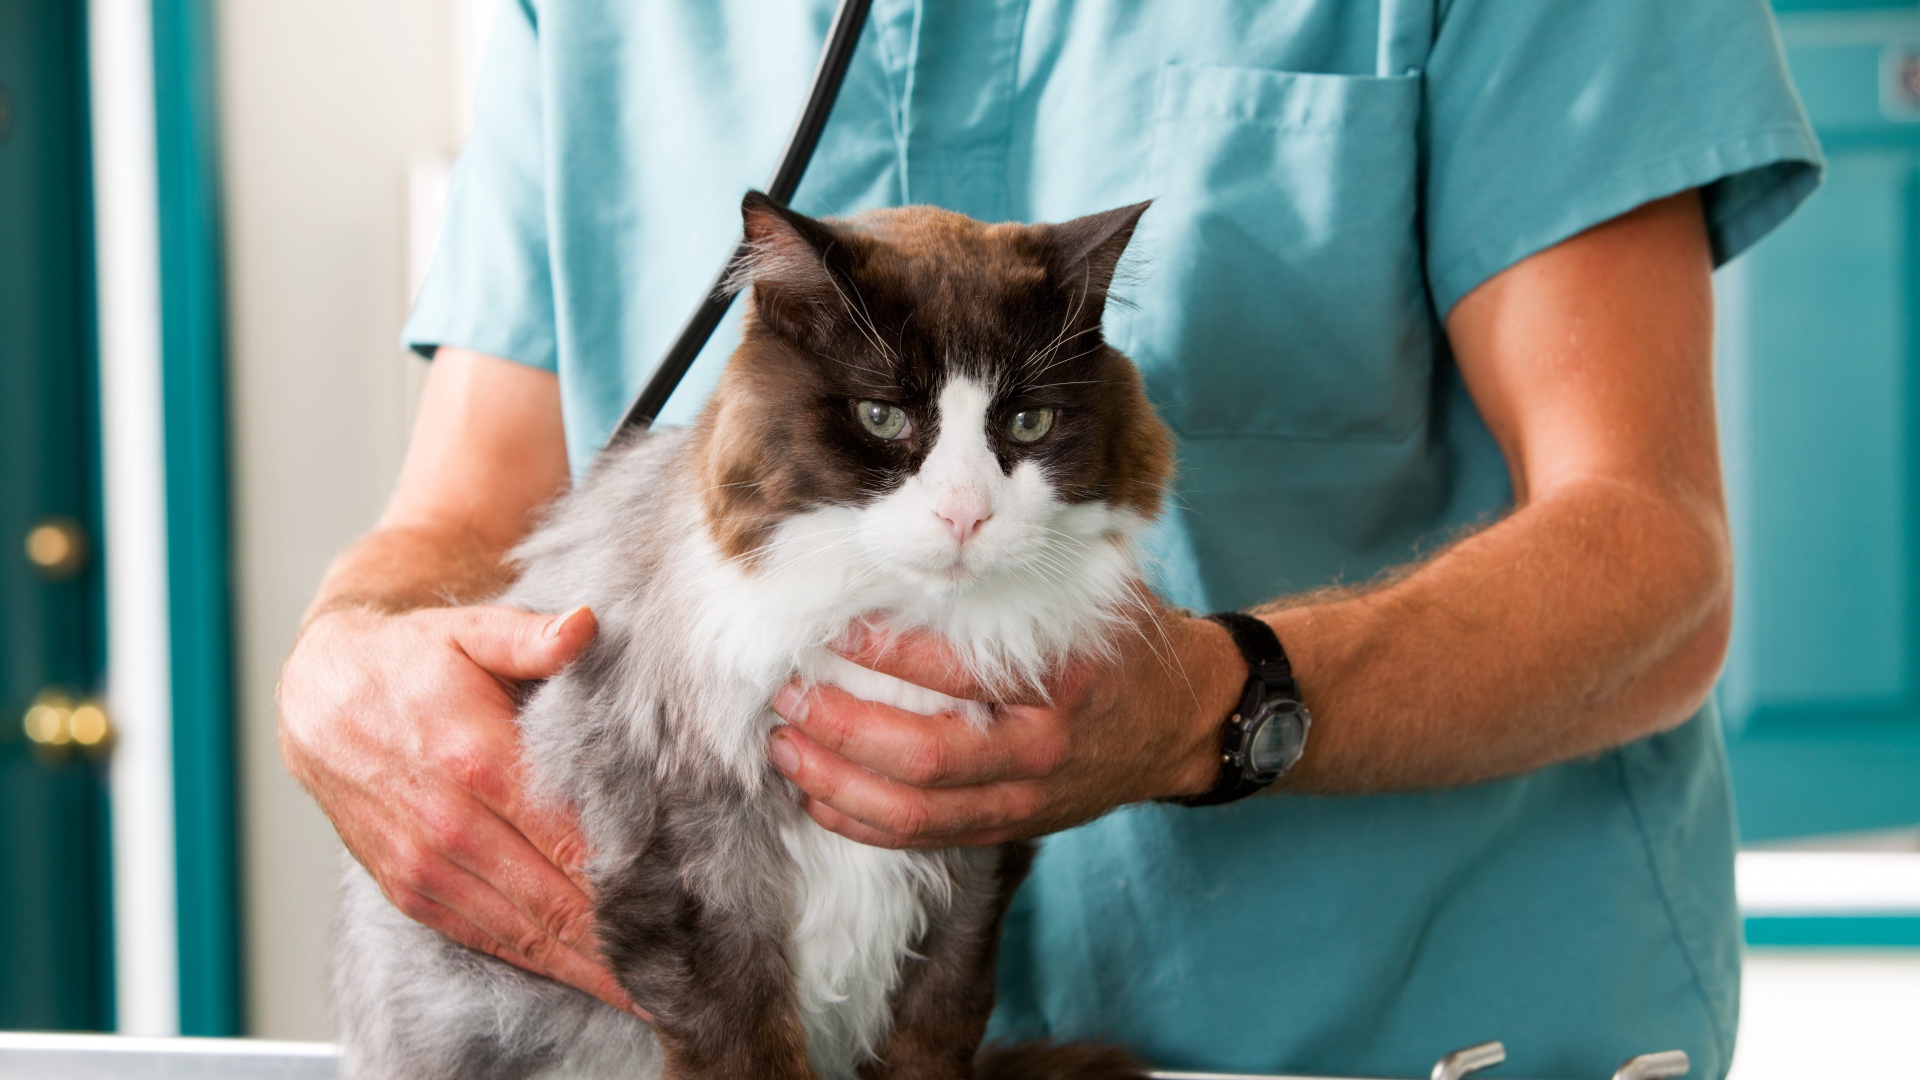 cat_inspection_hands_vet_treatment_78446_1920x1080